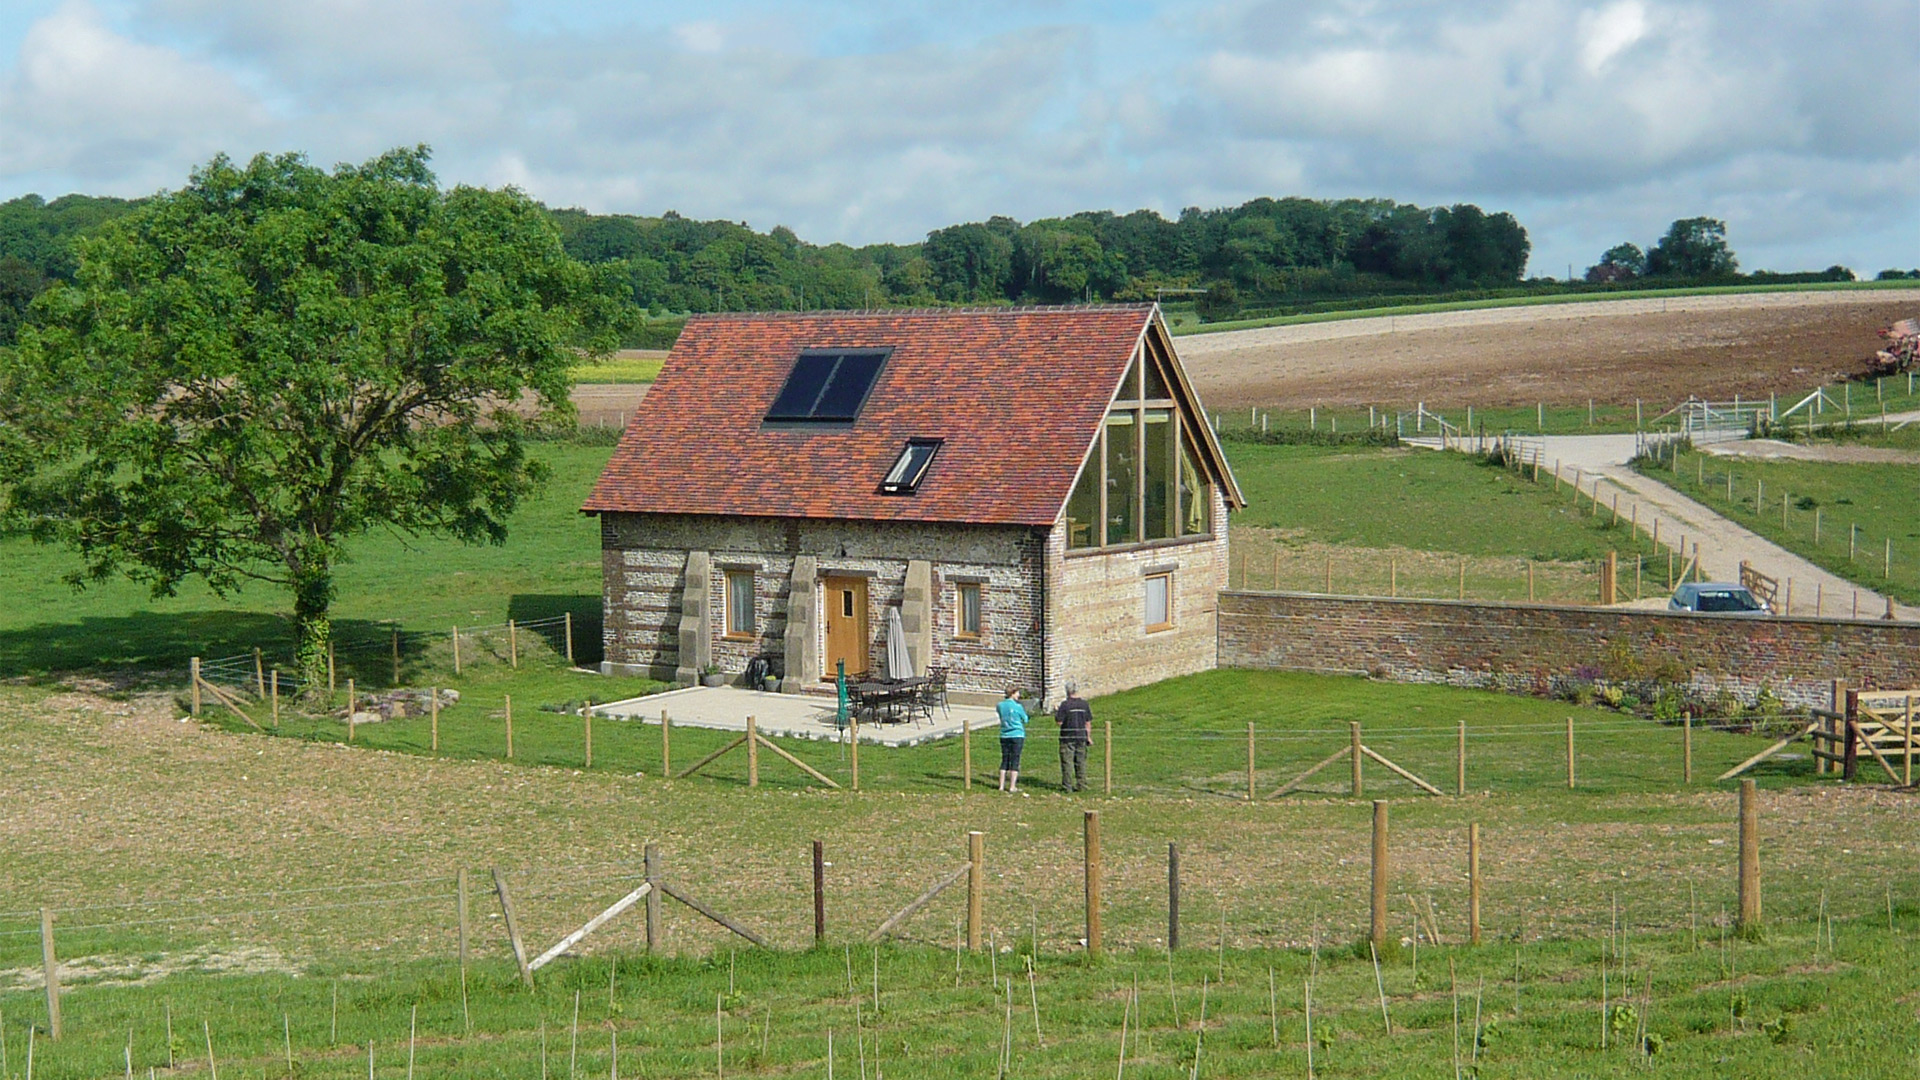 external rear view of red brick shepherds hut from field